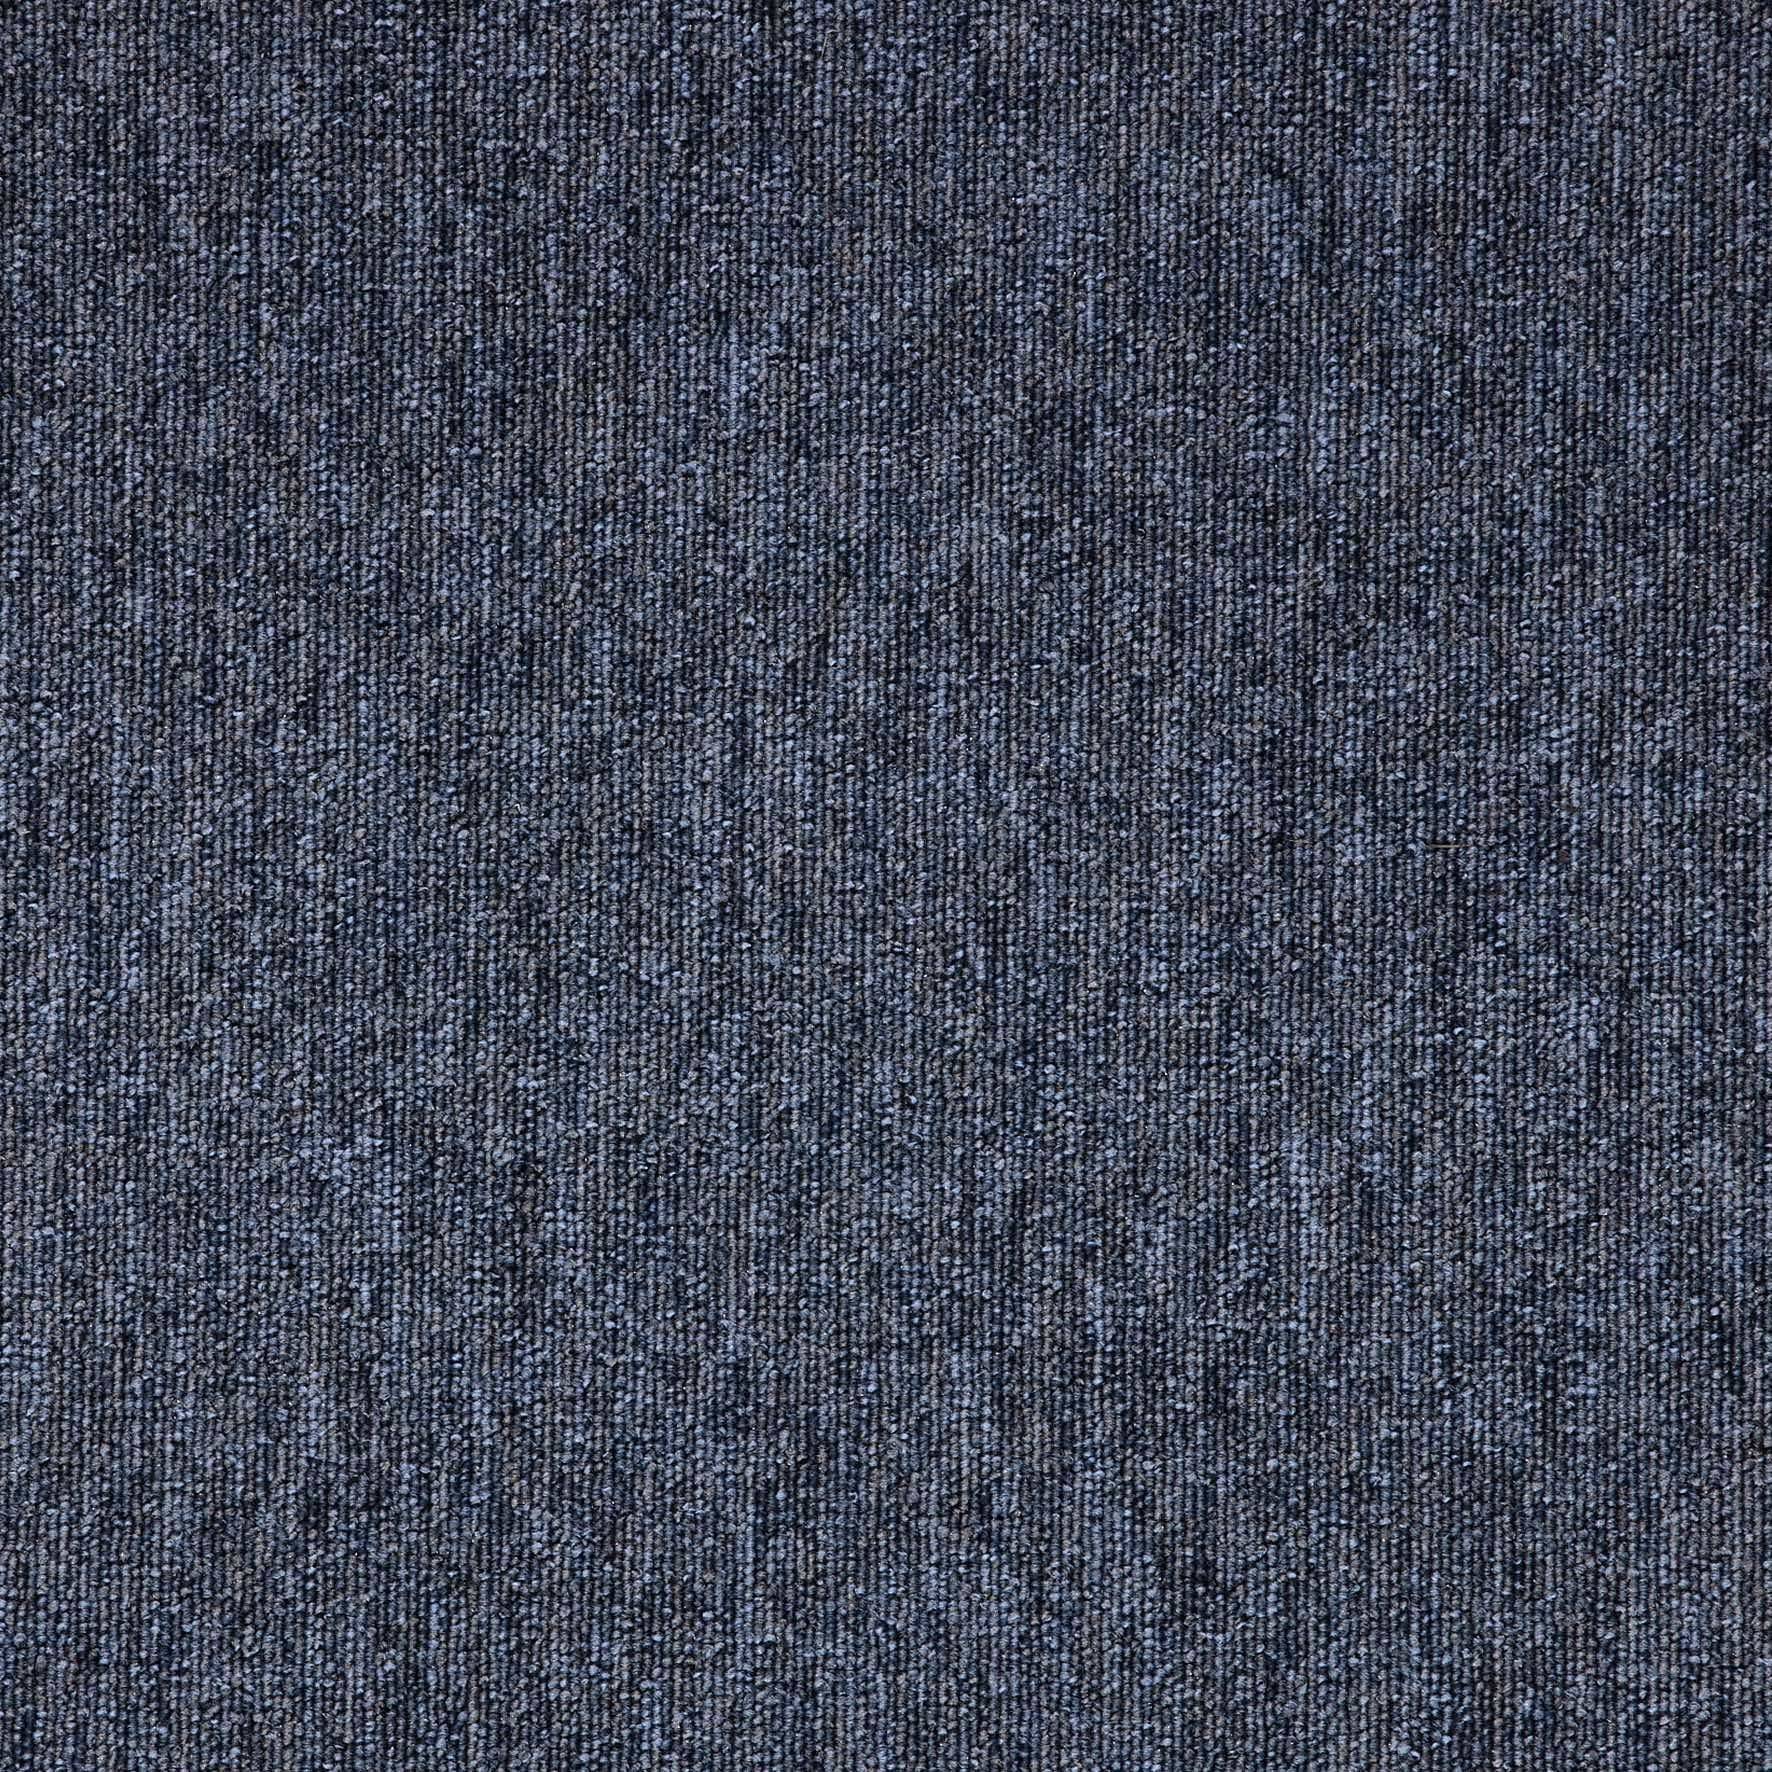 Paragon Macaw Carpet Tile Aegean